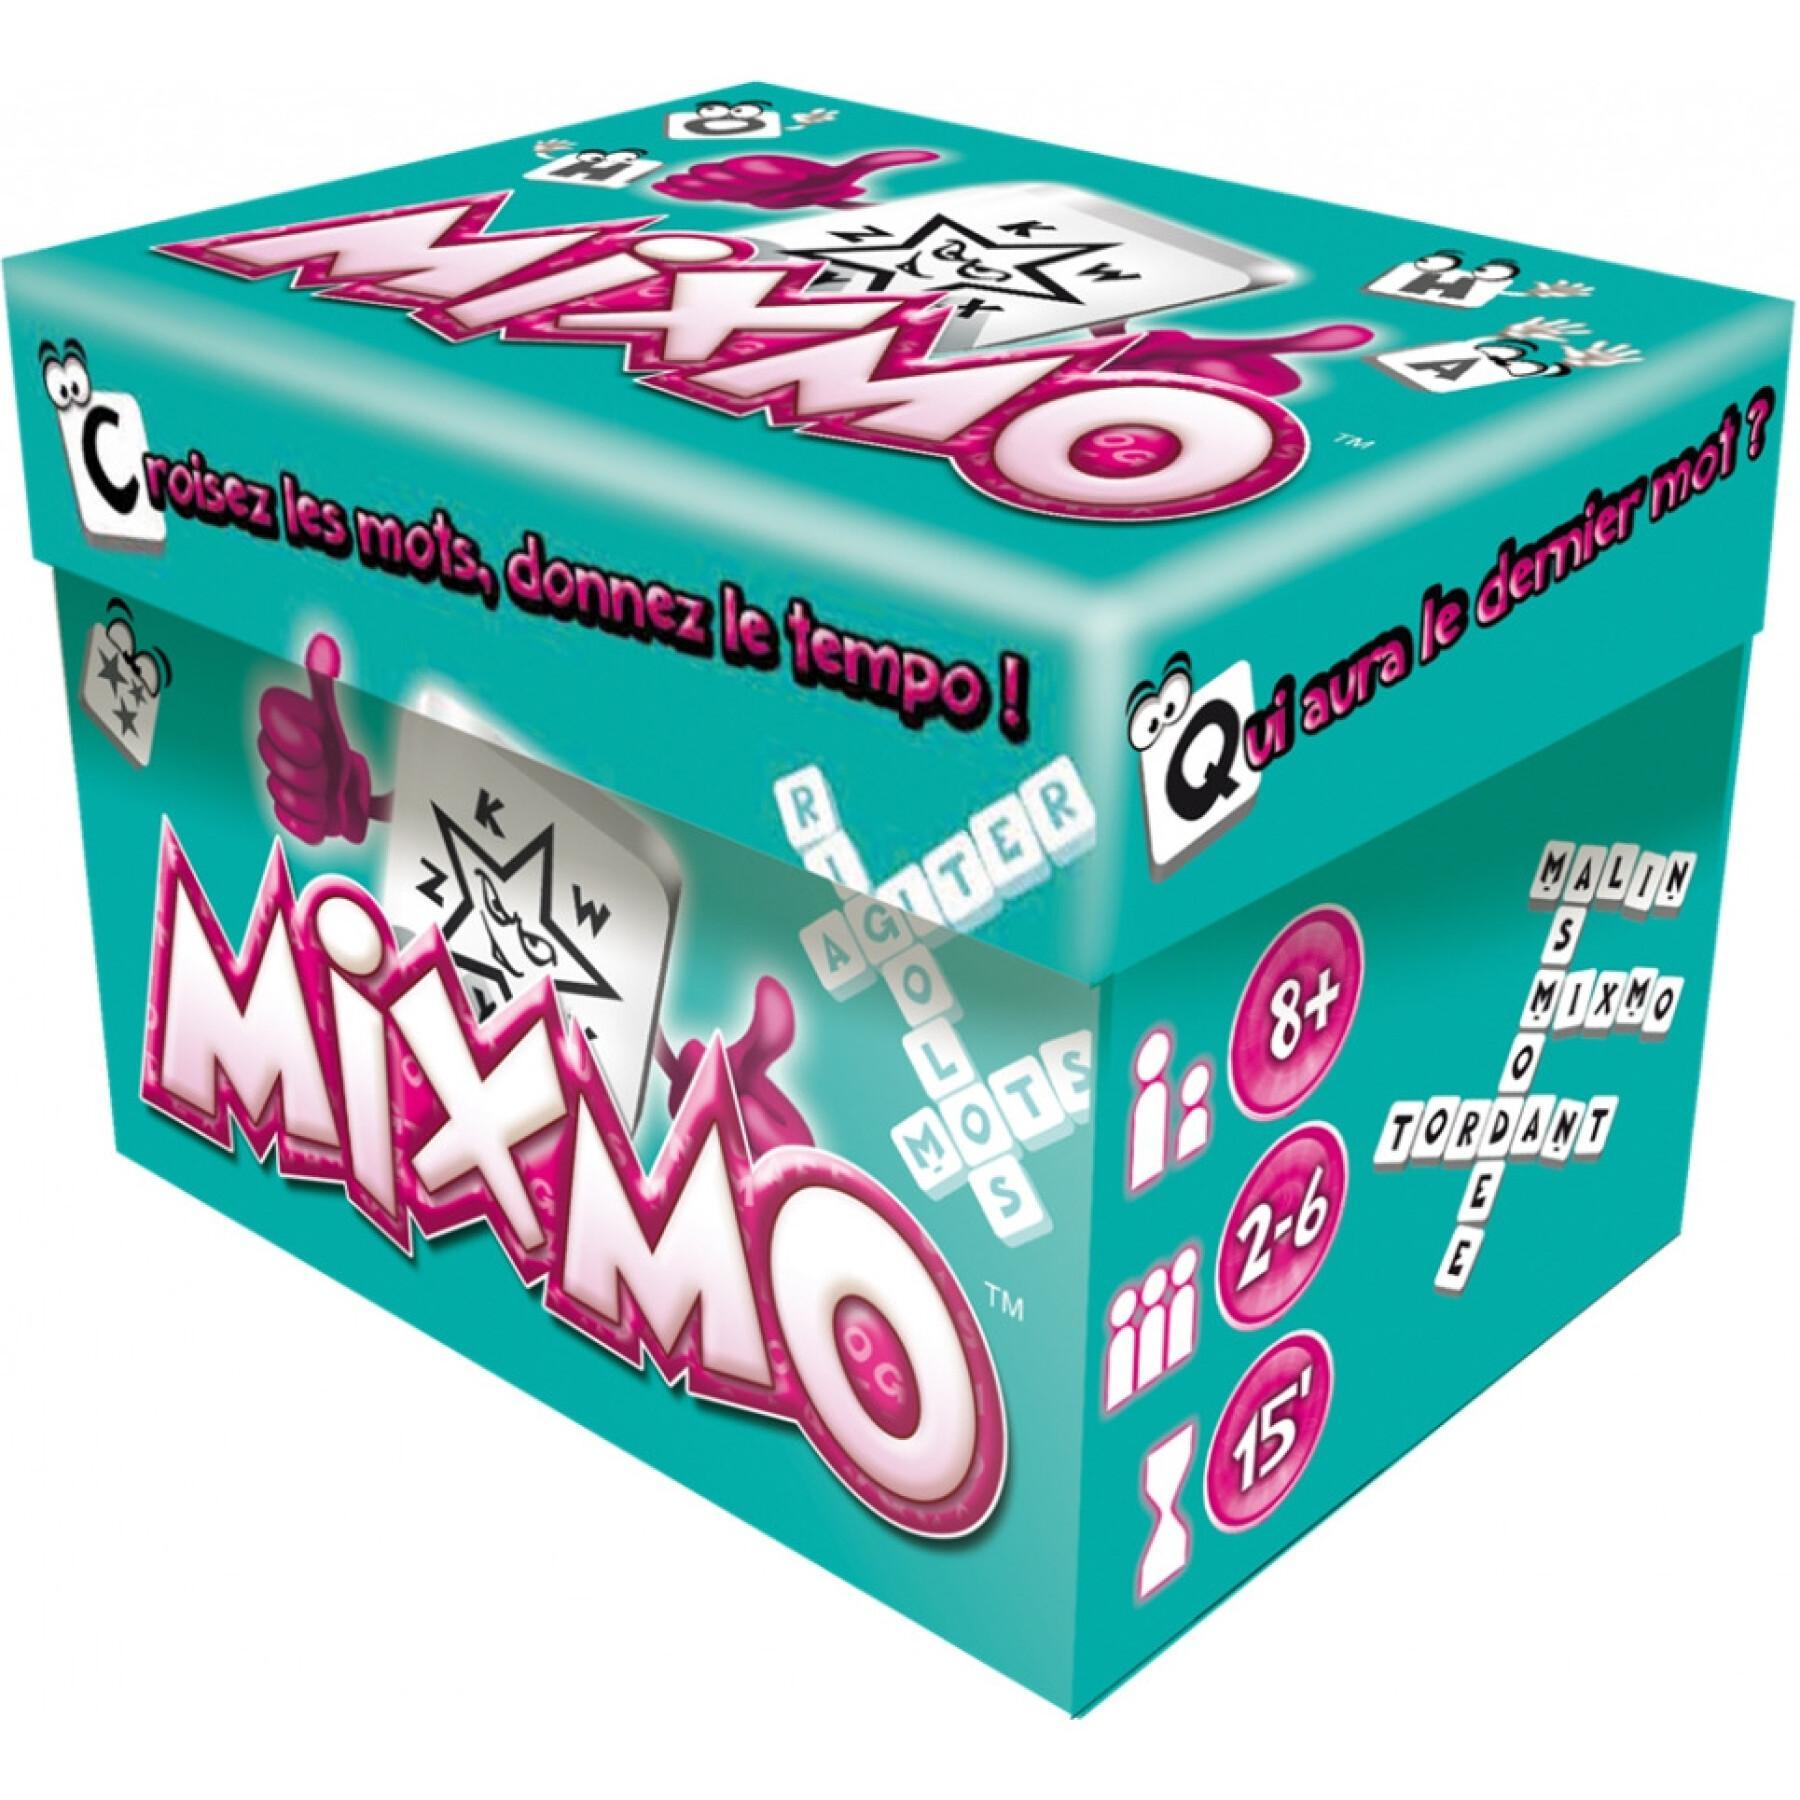 Board games Asmodee Mixmo